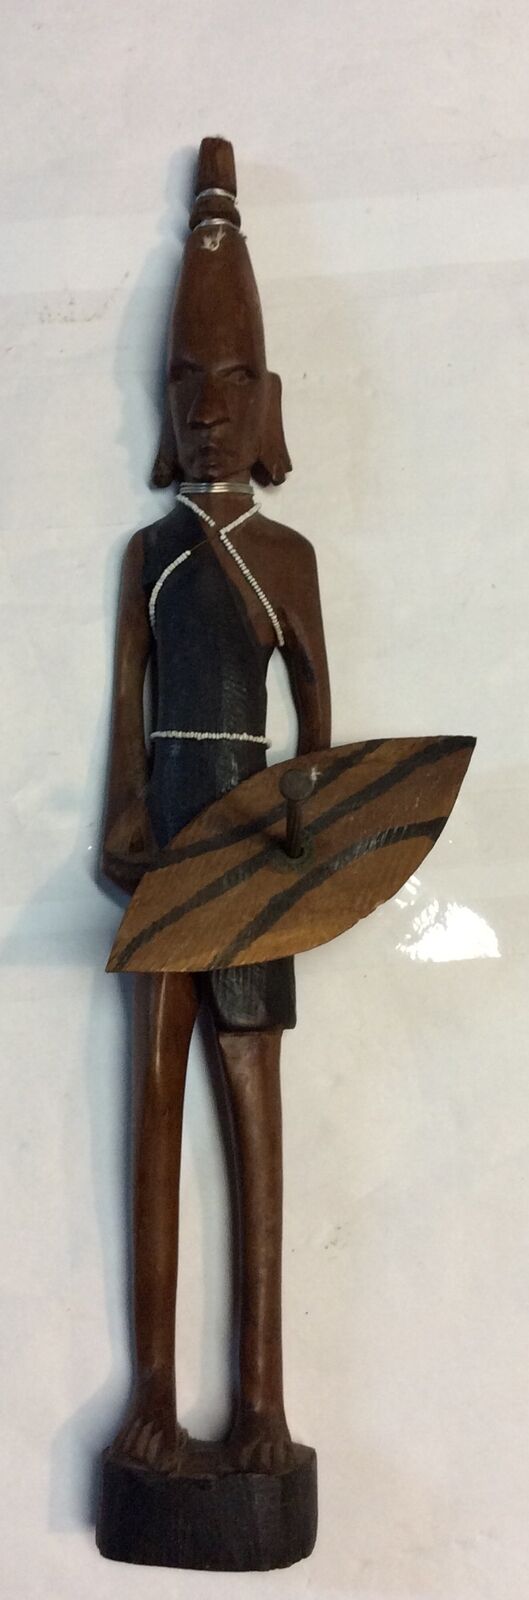 Vintage African Hand Carved Wood Male Figurine 15.5”